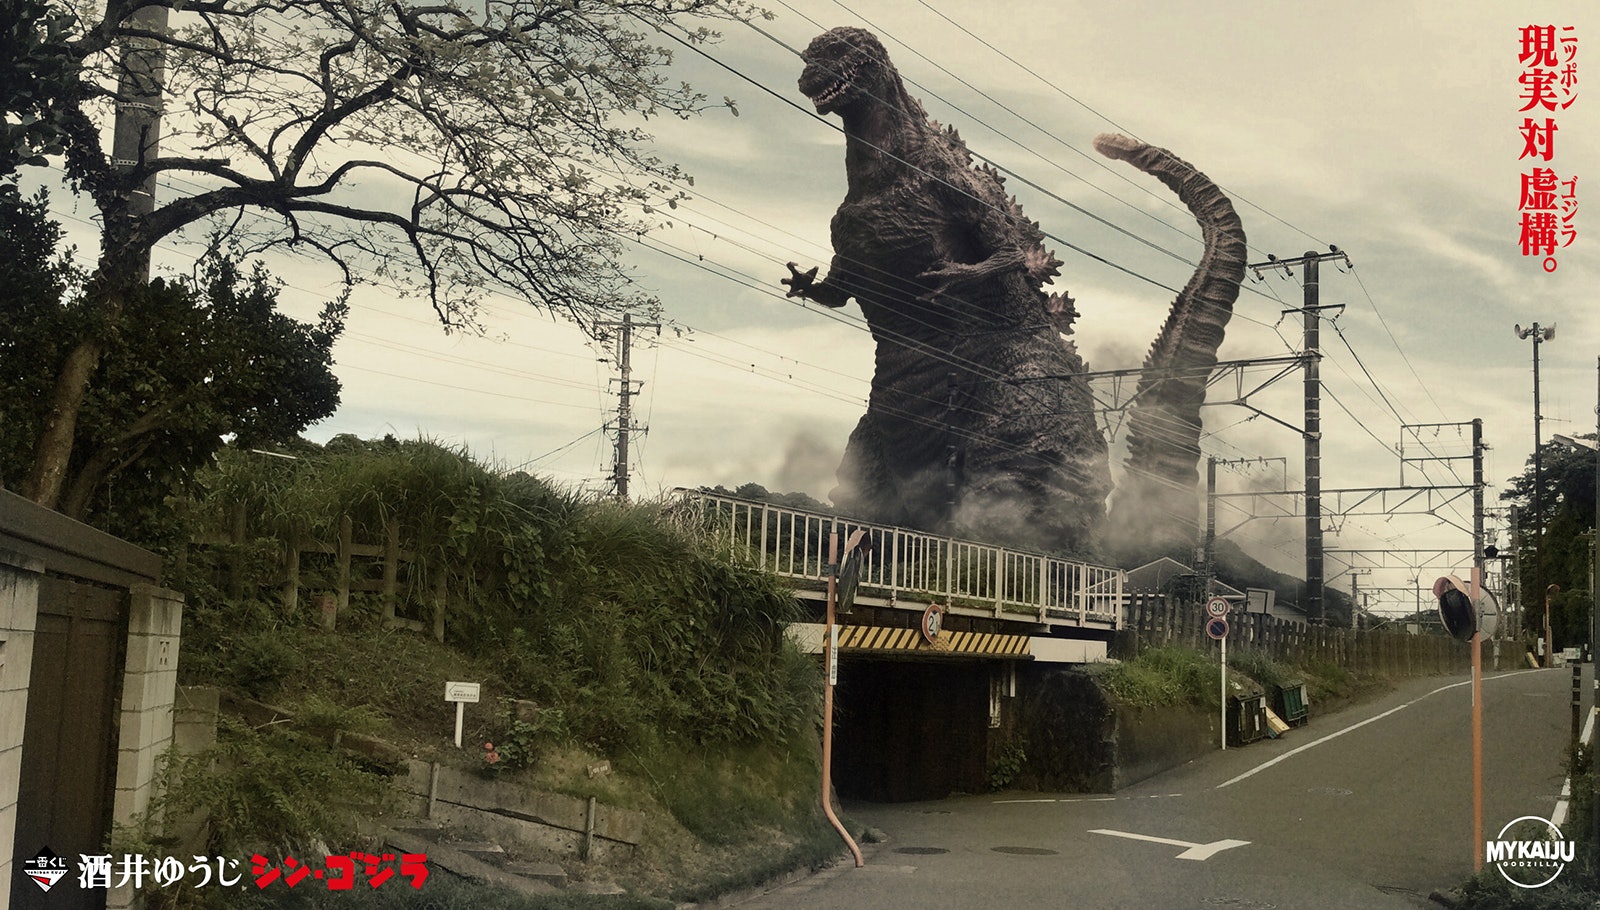 Shin Godzilla's Politics and the Meaning Behind Godzilla Films